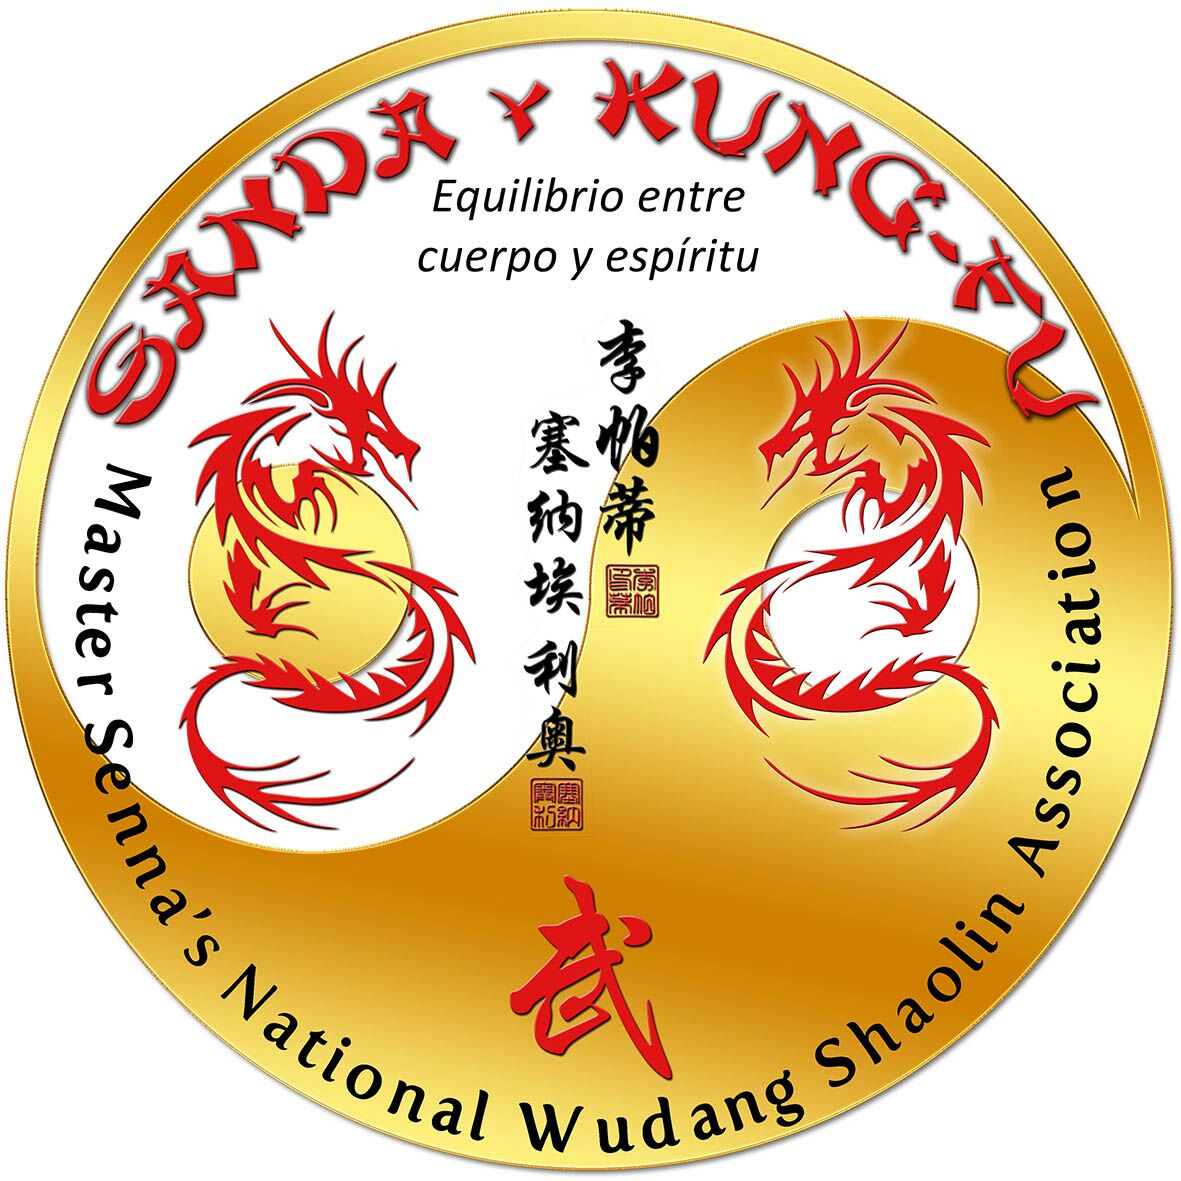 asociación Senna de Kung-fu Shaolin y Wudang